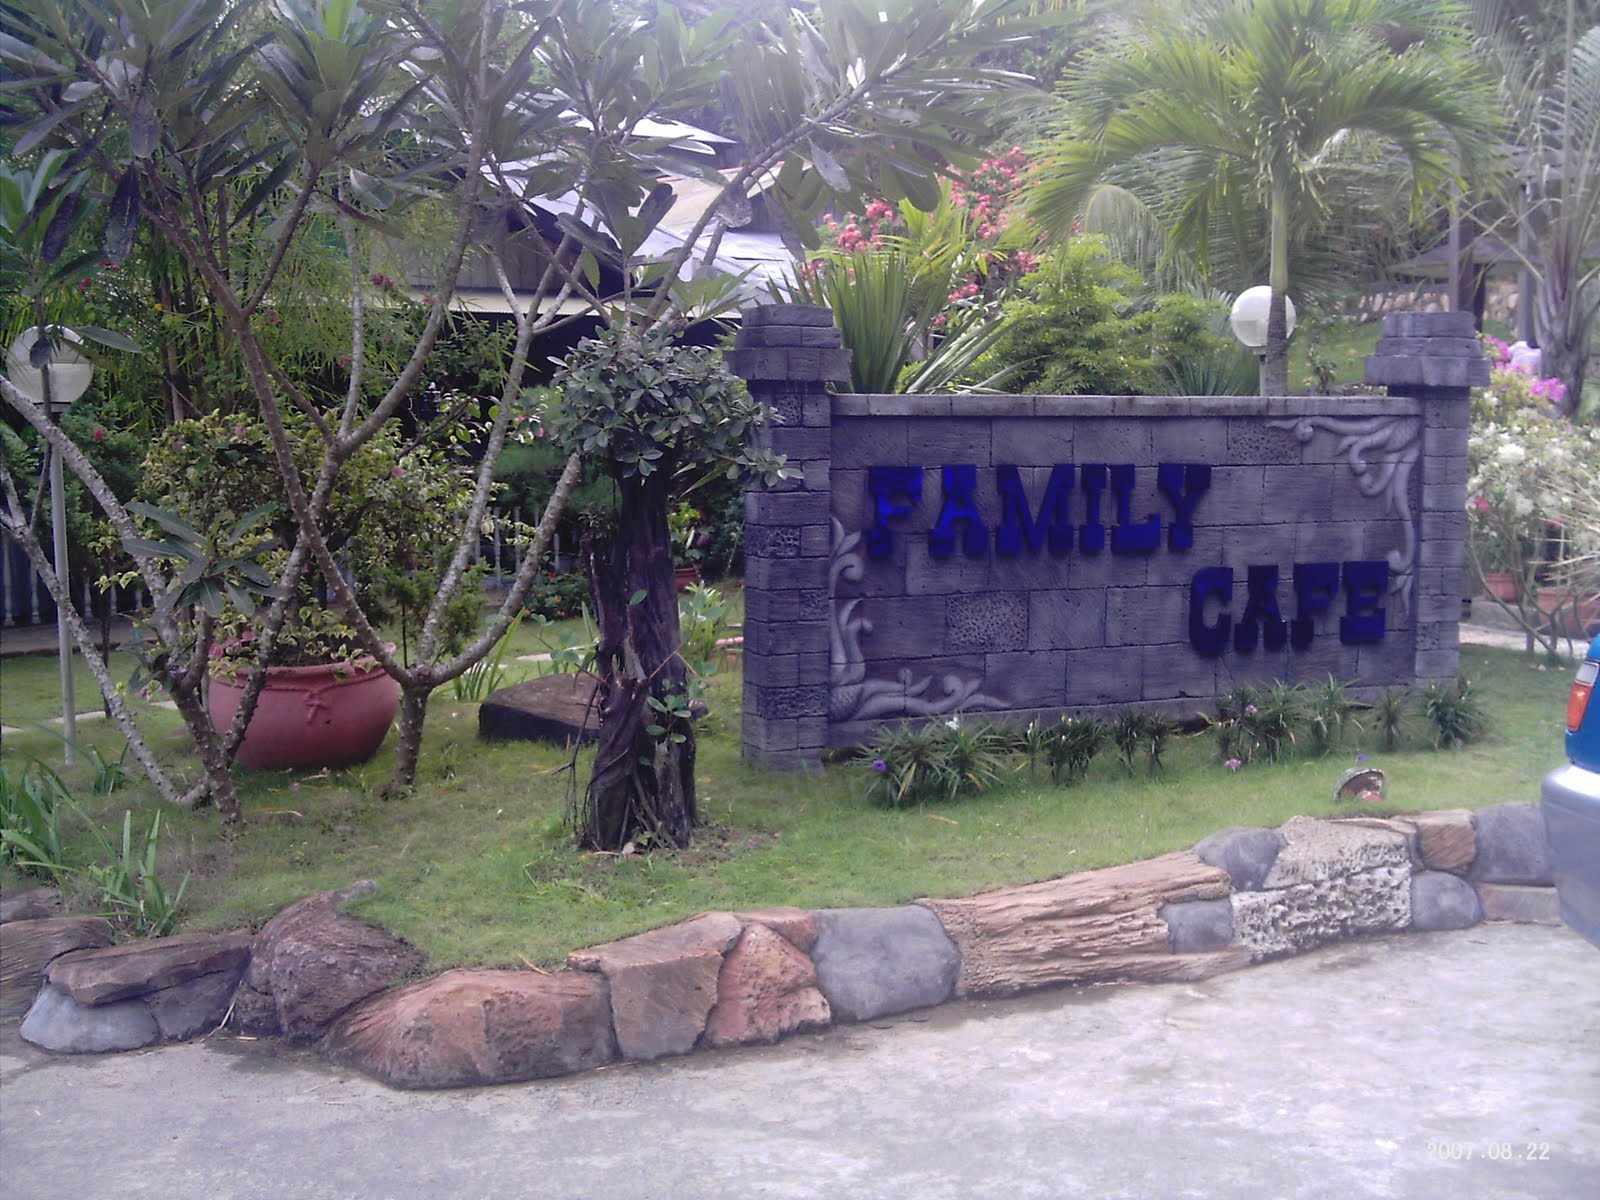 Family Cafe - Berau: Welcome to Family Cafe !!!